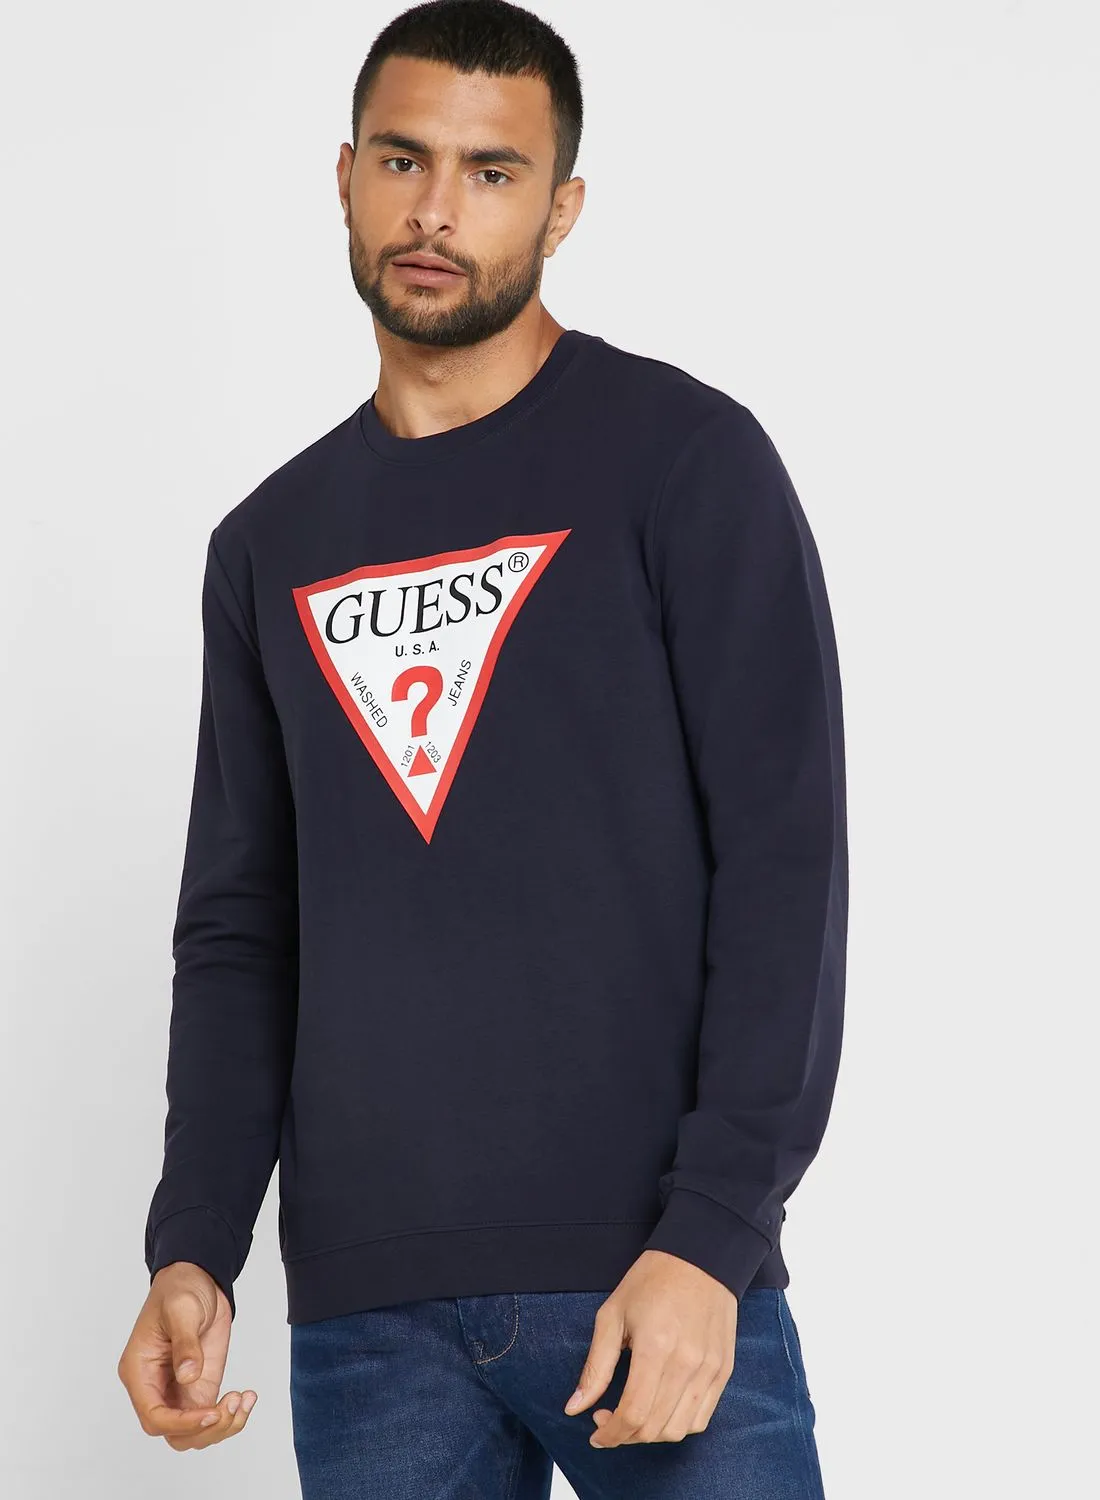 GUESS Logo Printed Sweatshirt